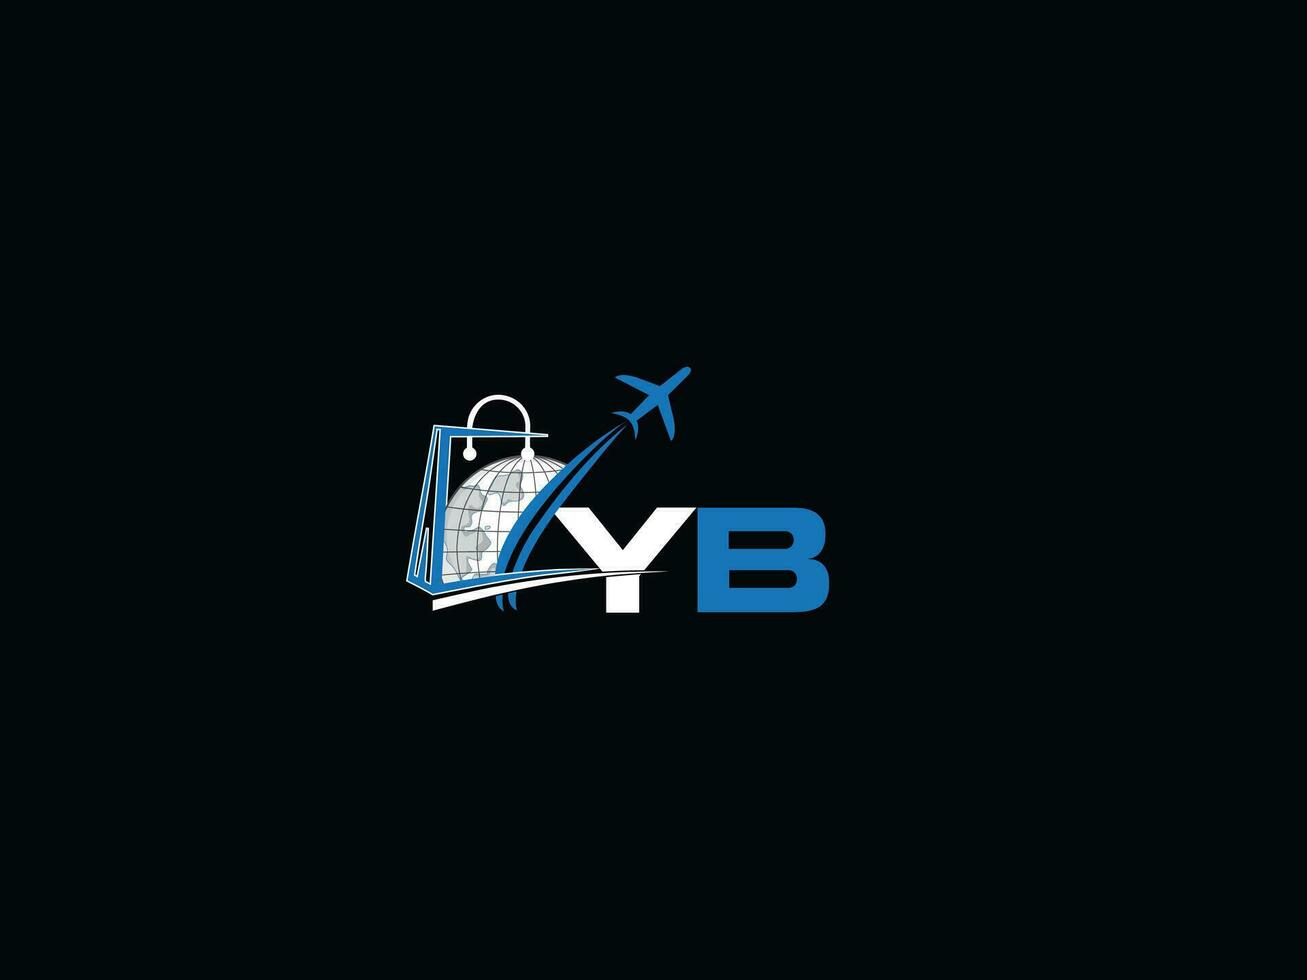 logotype global yb logo icône vecteur, abstrait air yb logo pour Voyage agence vecteur